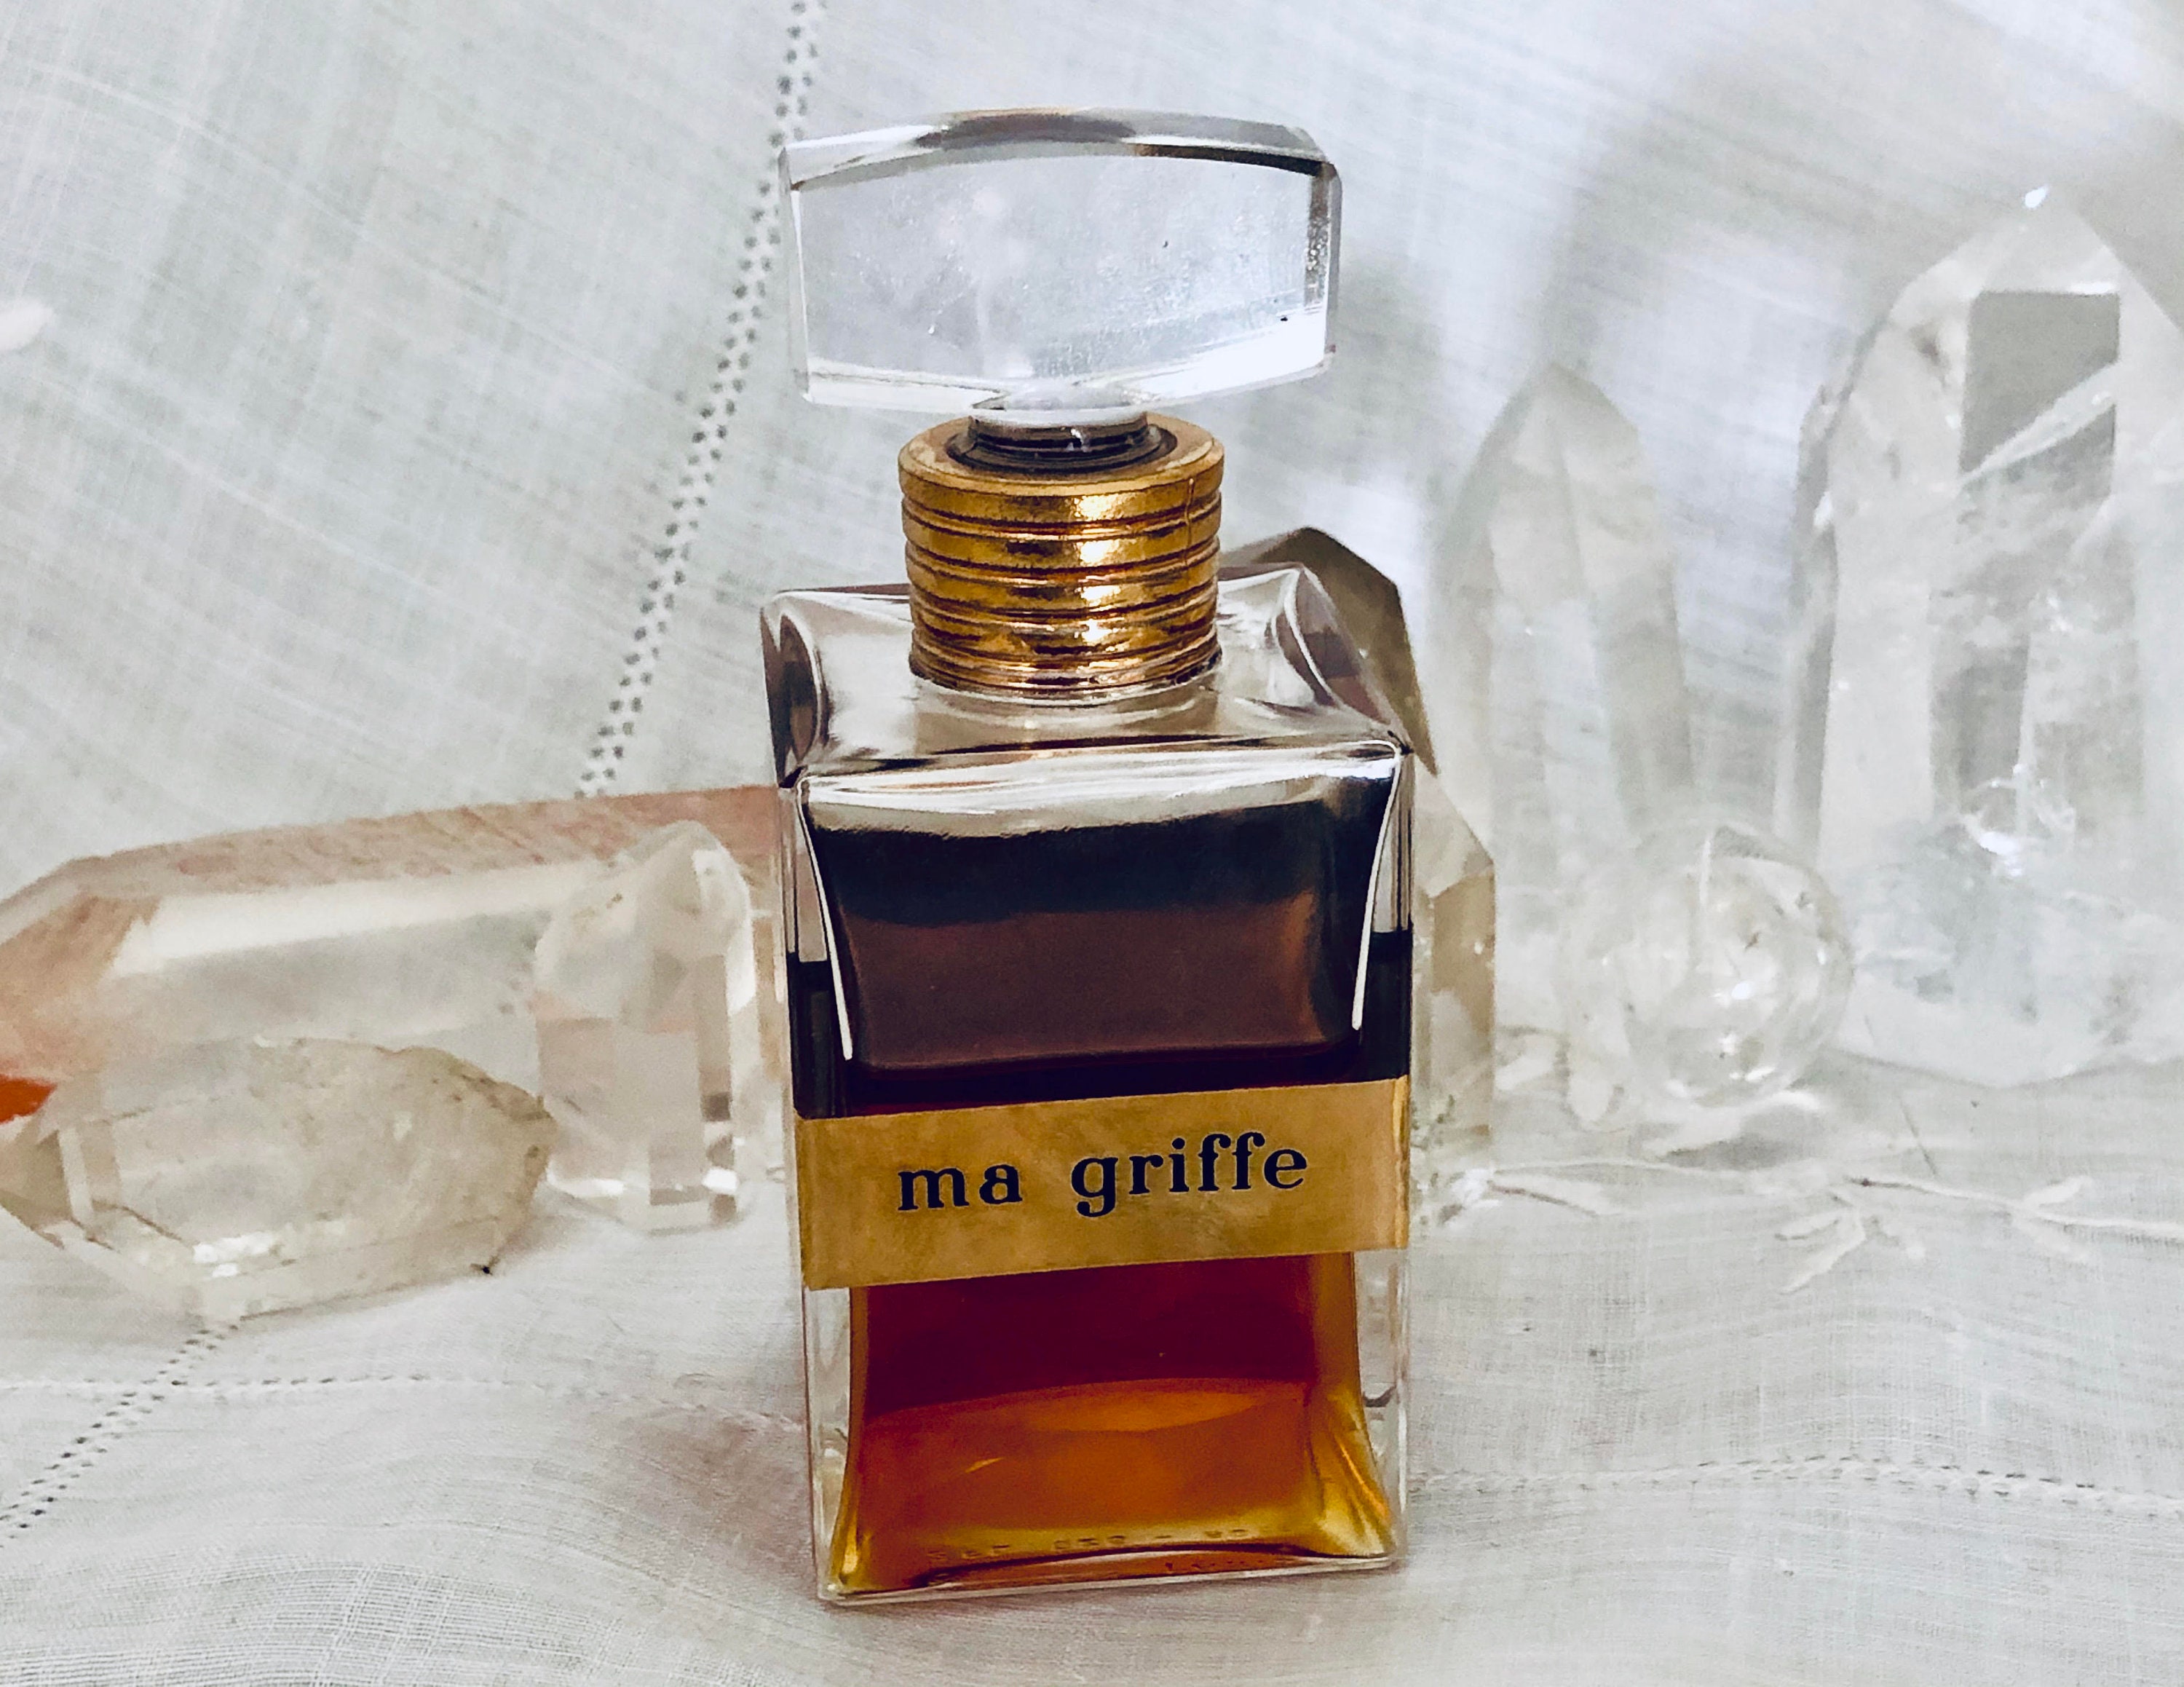 Ma Griffe by Carven Perfume Women 3.3oz/ 100ml Parfum de Toilette Spray Vintage